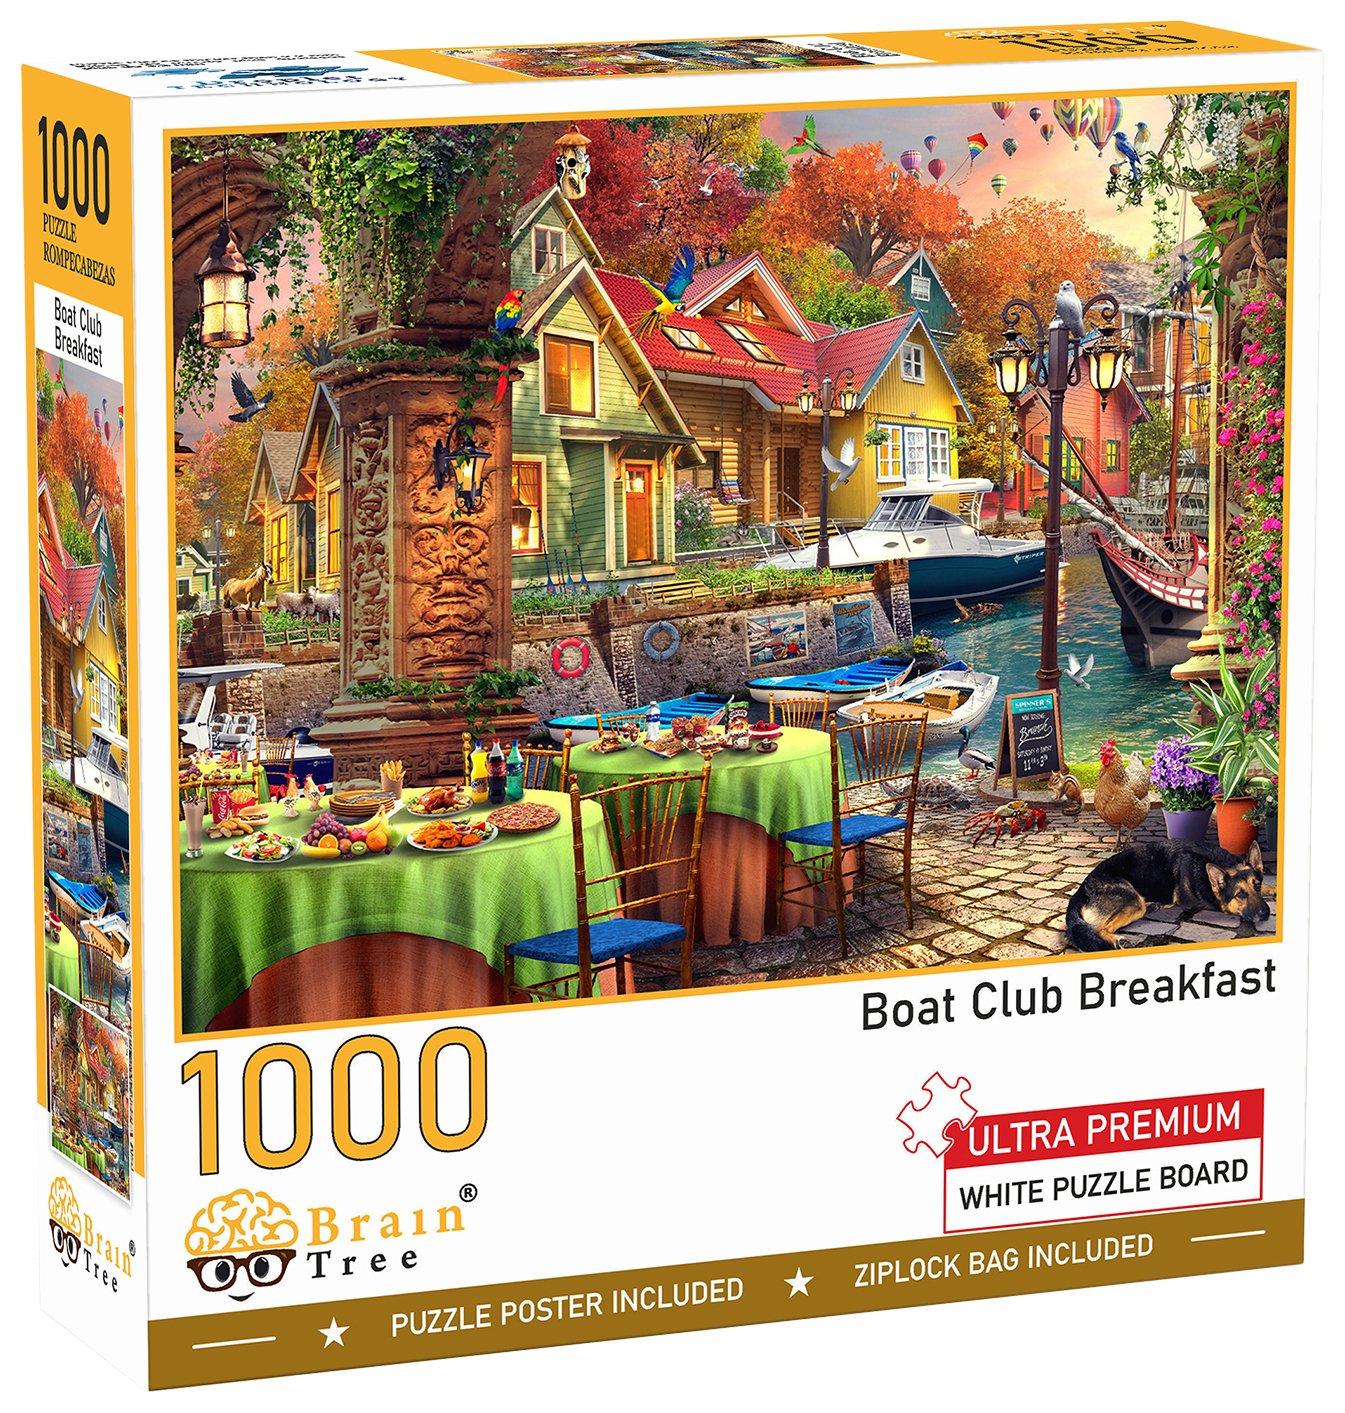 1,000 Piece Boat Club Breakfast Jigsaw Puzzle